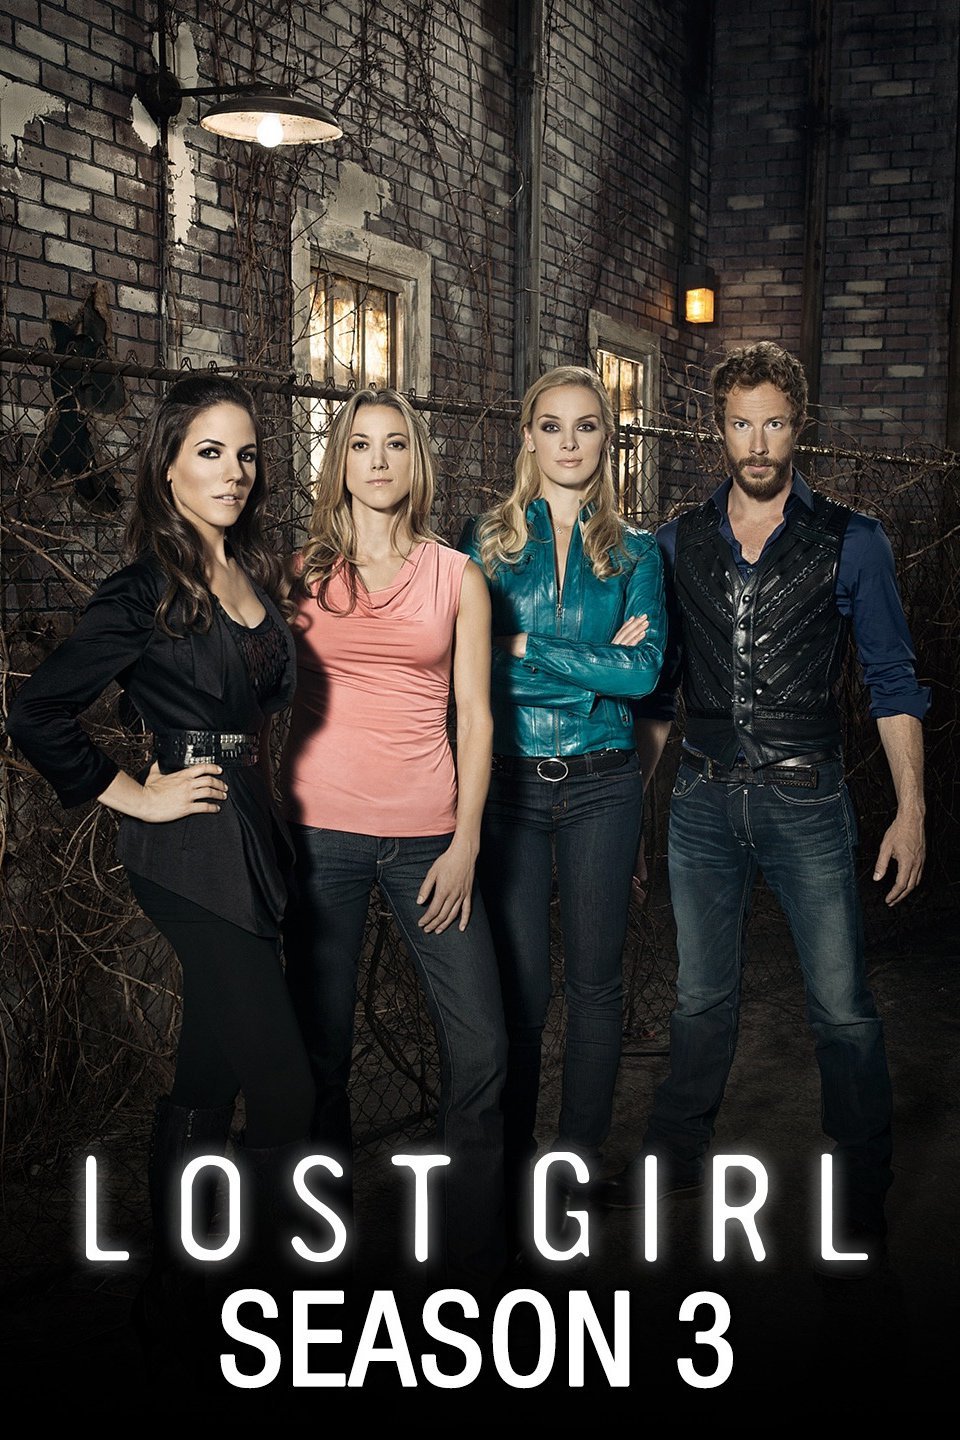 lost girl season 3 download free